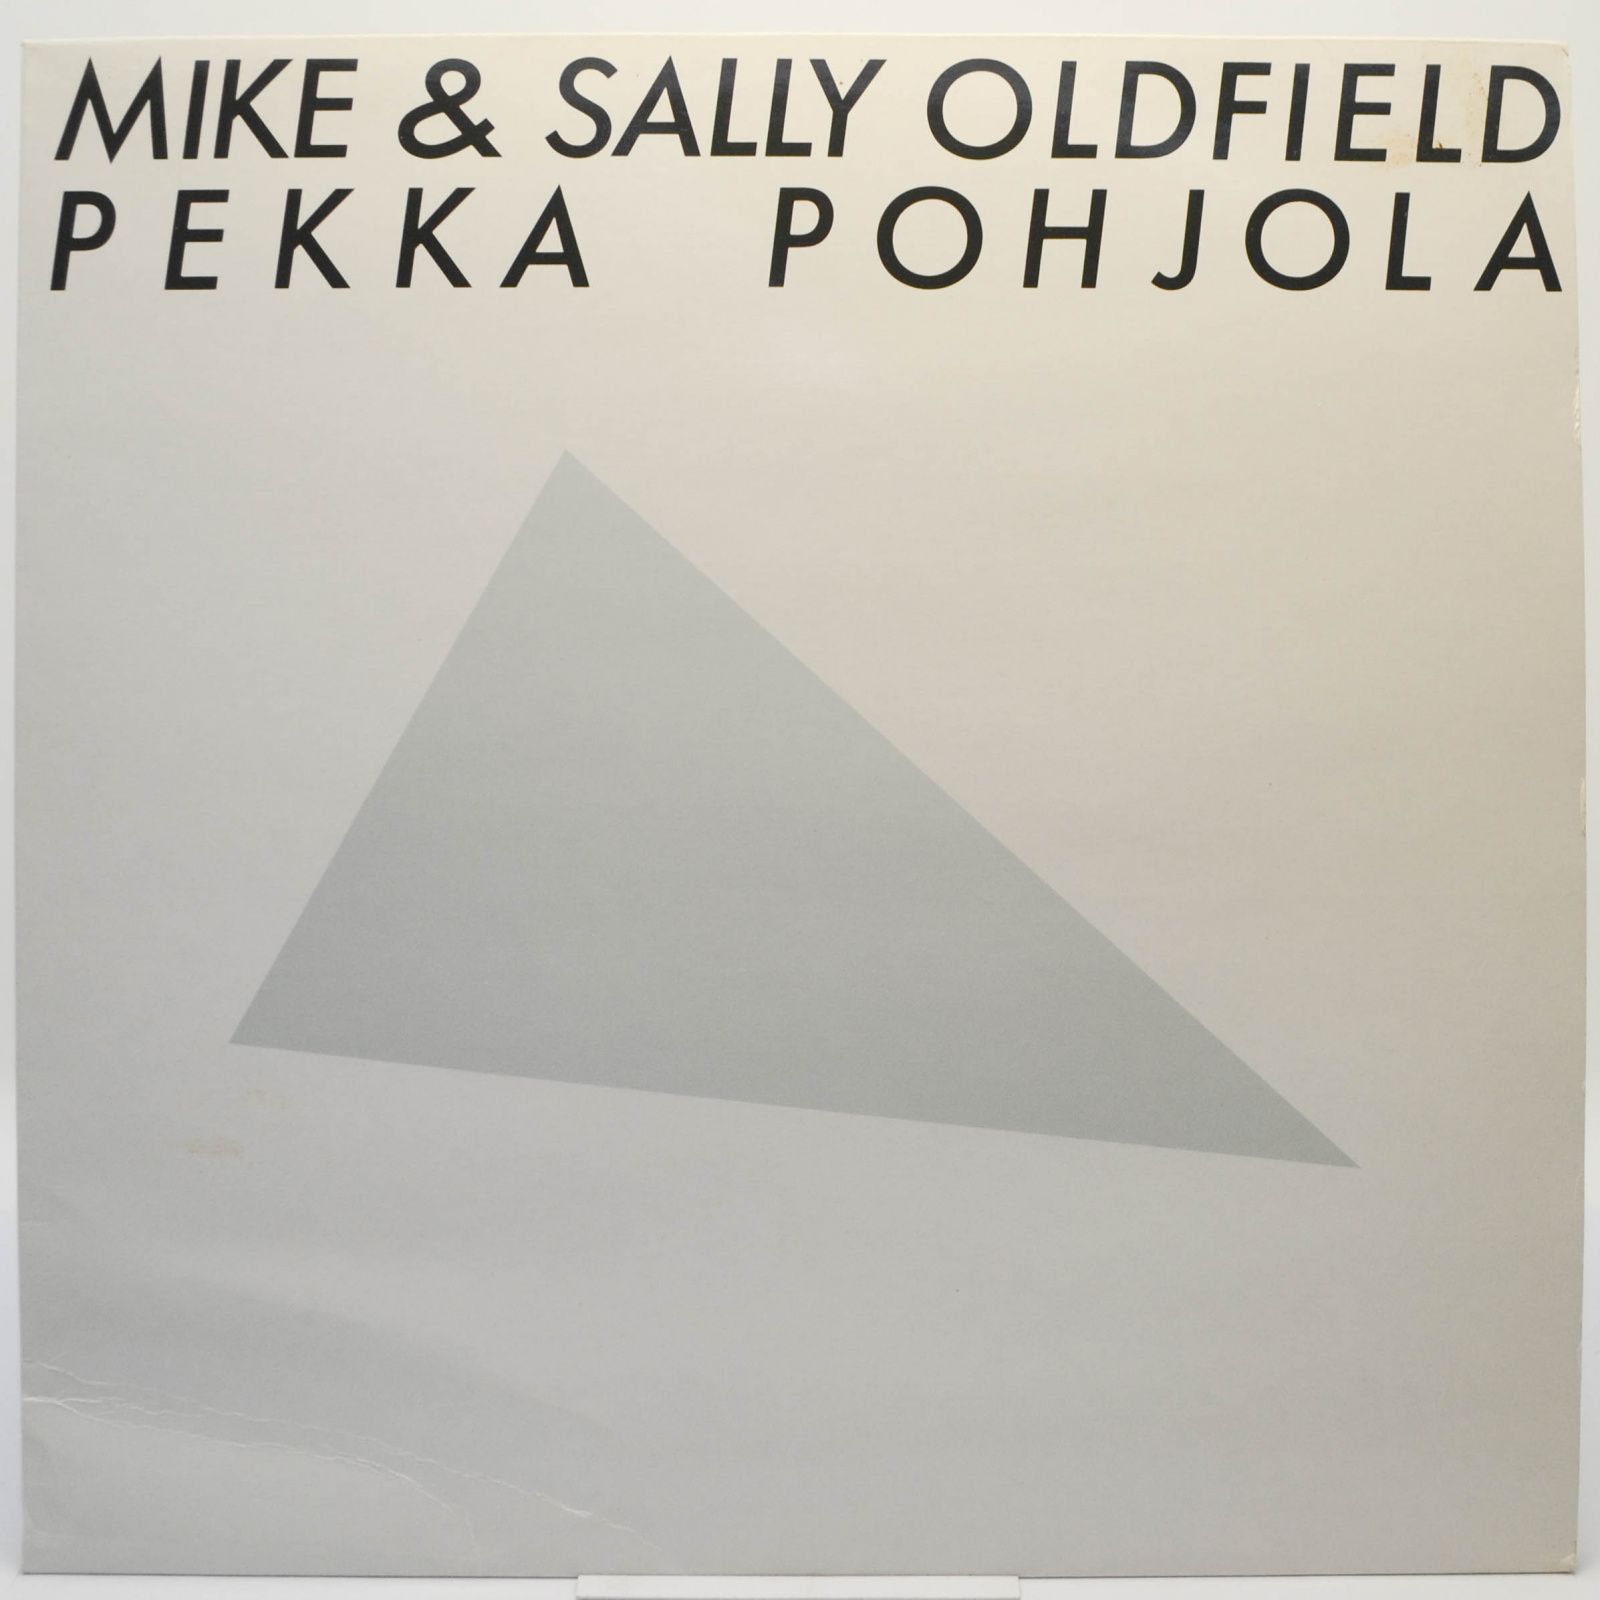 Mike* & Sally Oldfield, Pekka Pohjola — Mike & Sally Oldfield, Pekka Pohjola, 1981